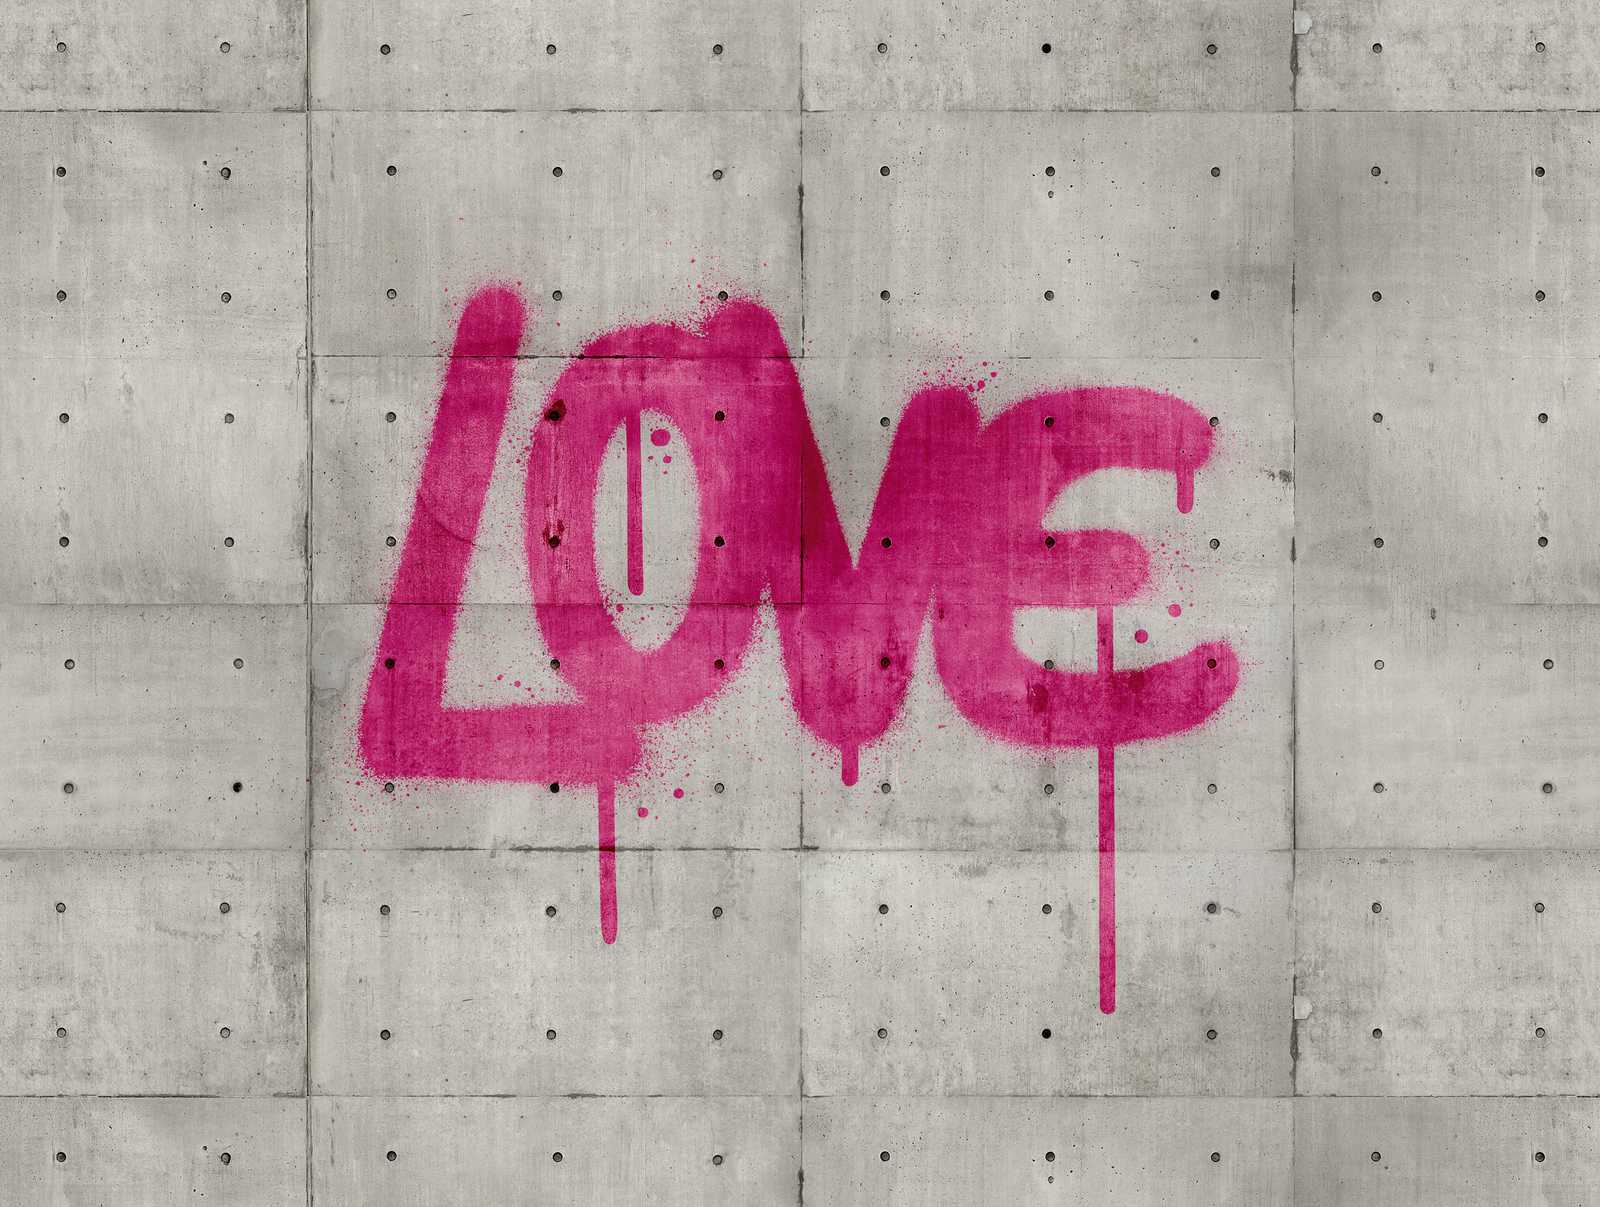             Behang noviteit - beton motief behang LOVE graffiti, grijs & roze
        